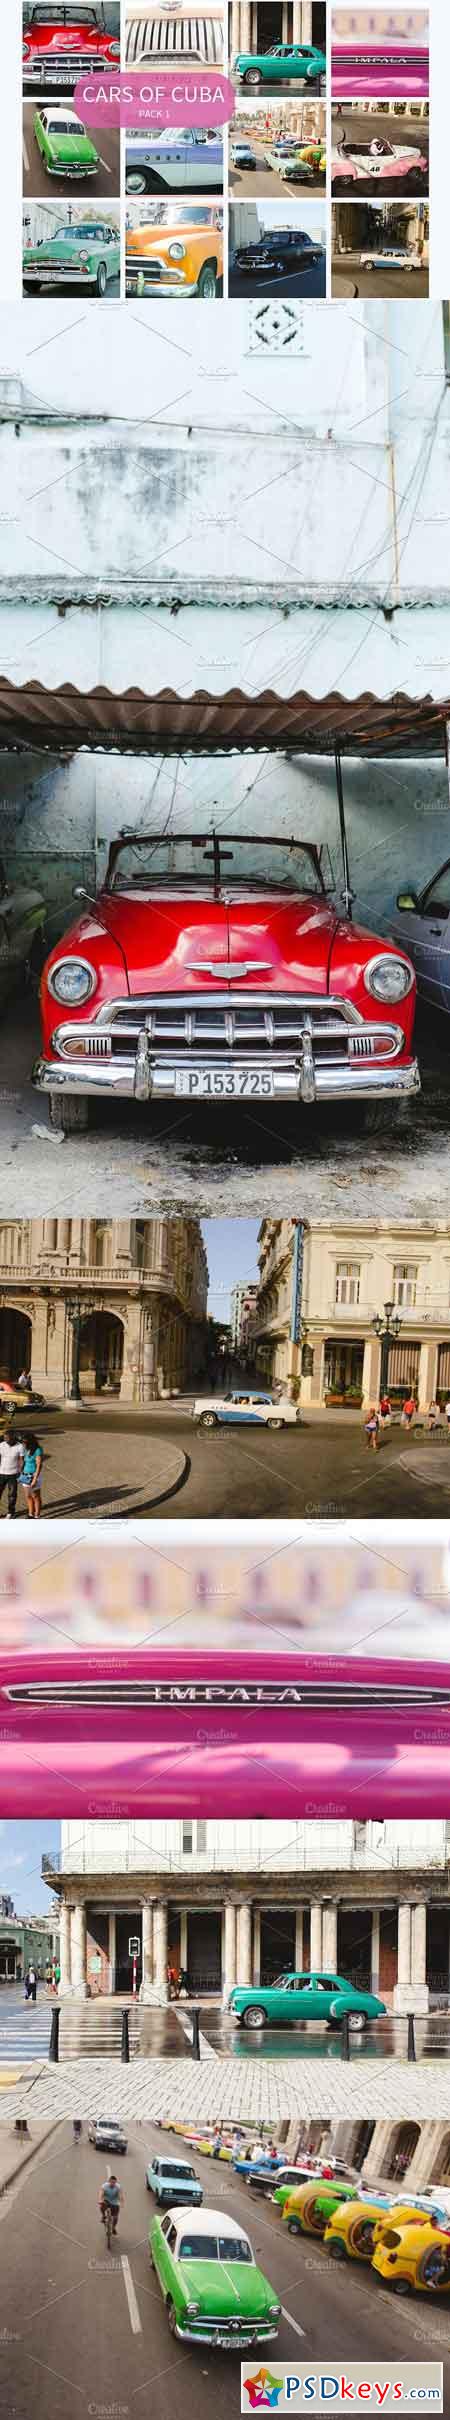 Classic Cars of Cuba 1294723